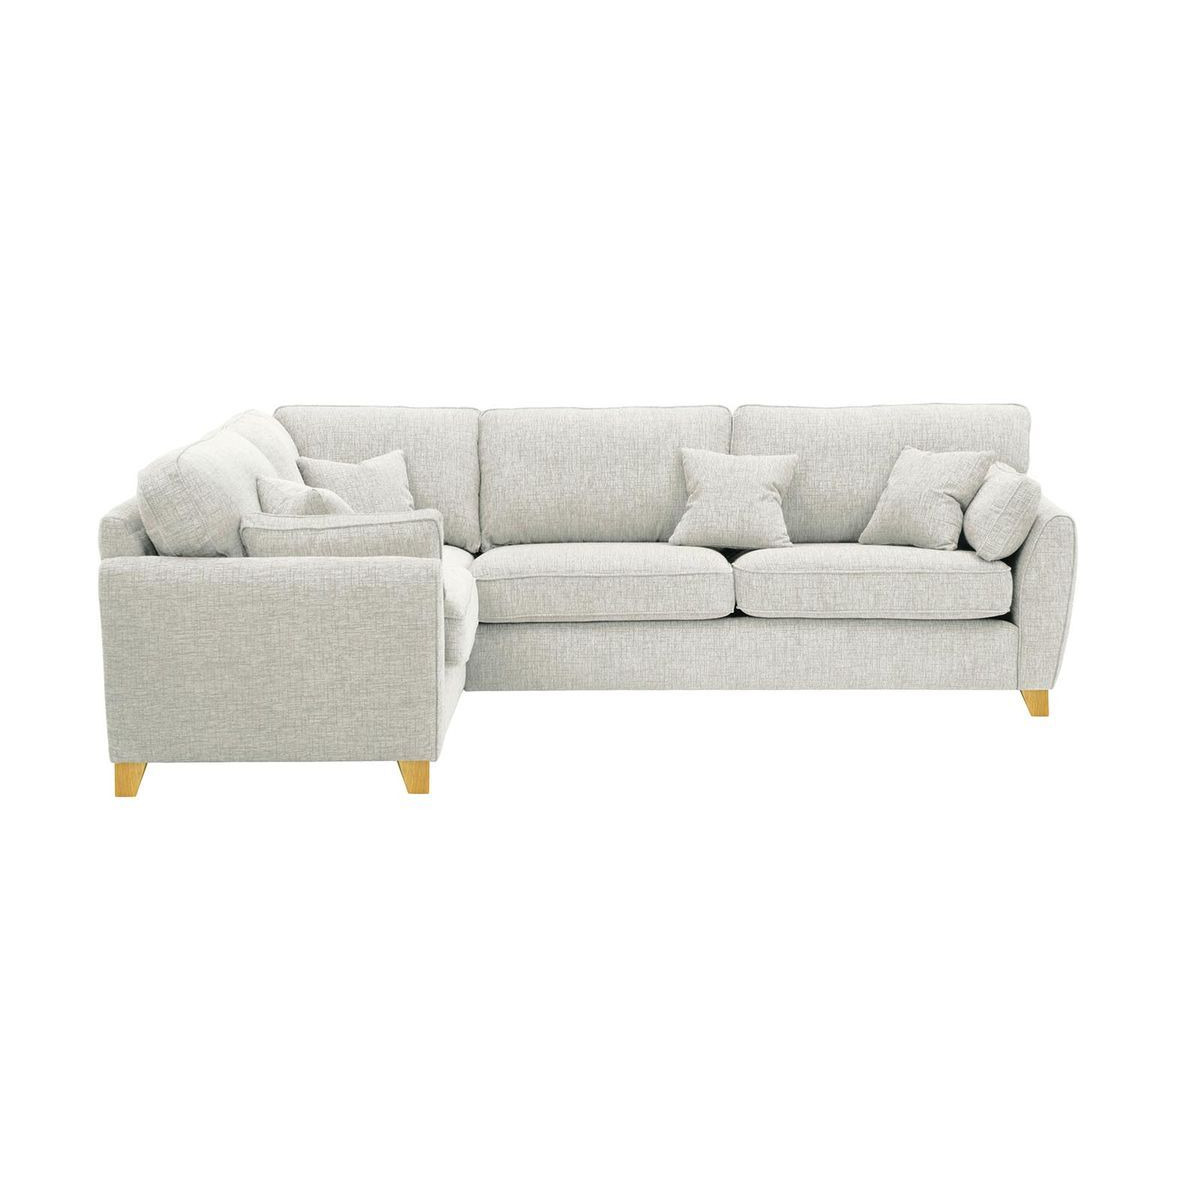 James Large Left Corner Sofa, light beige, Leg colour: white - image 1